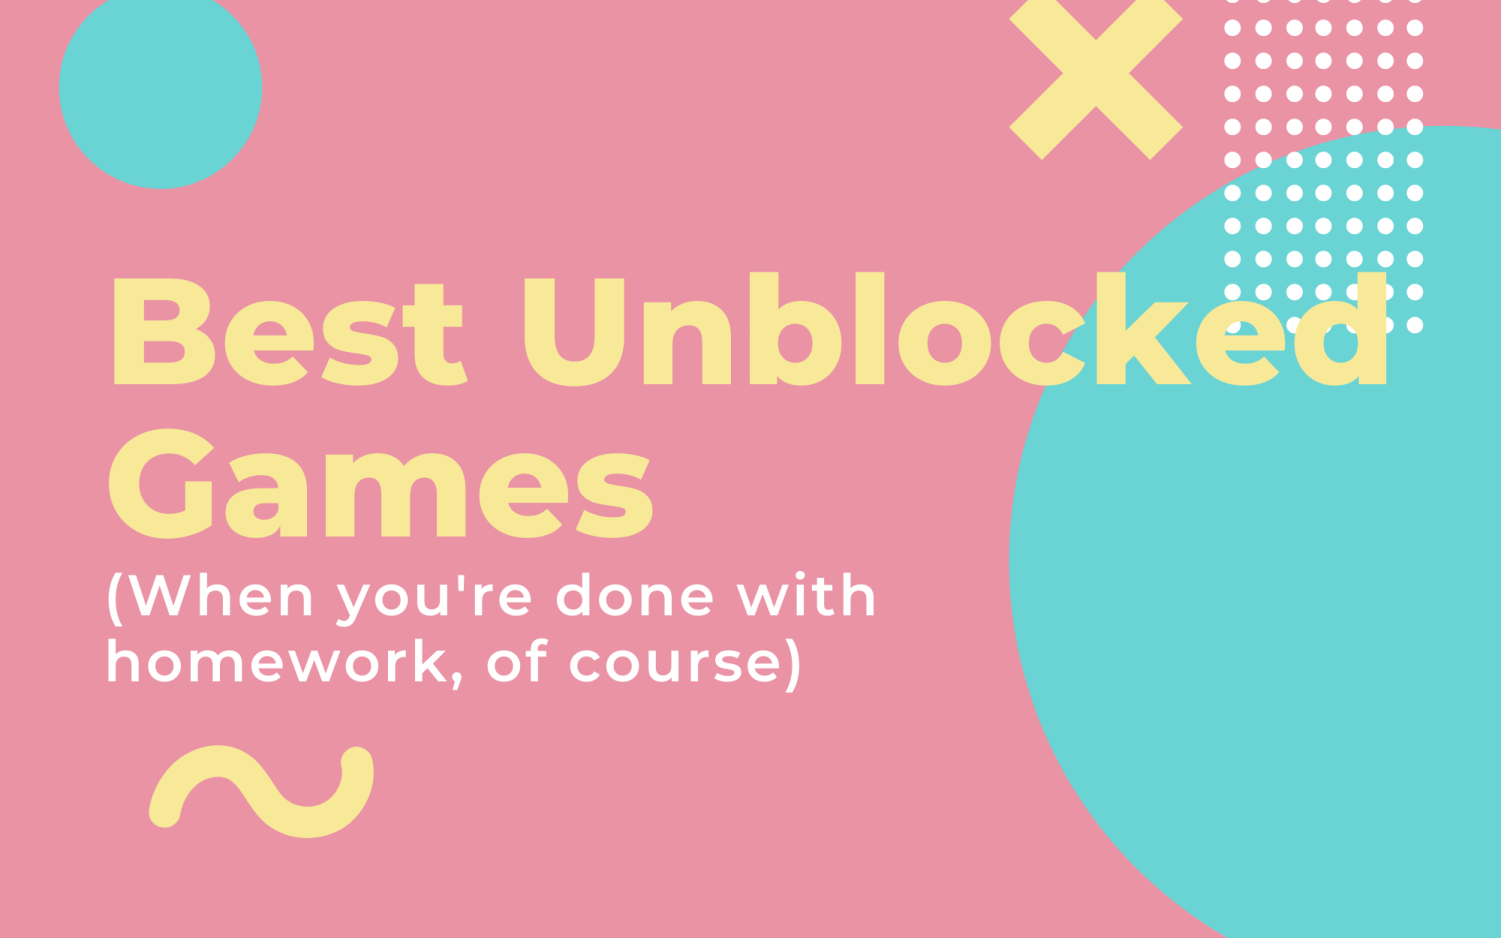 unblocked games at school